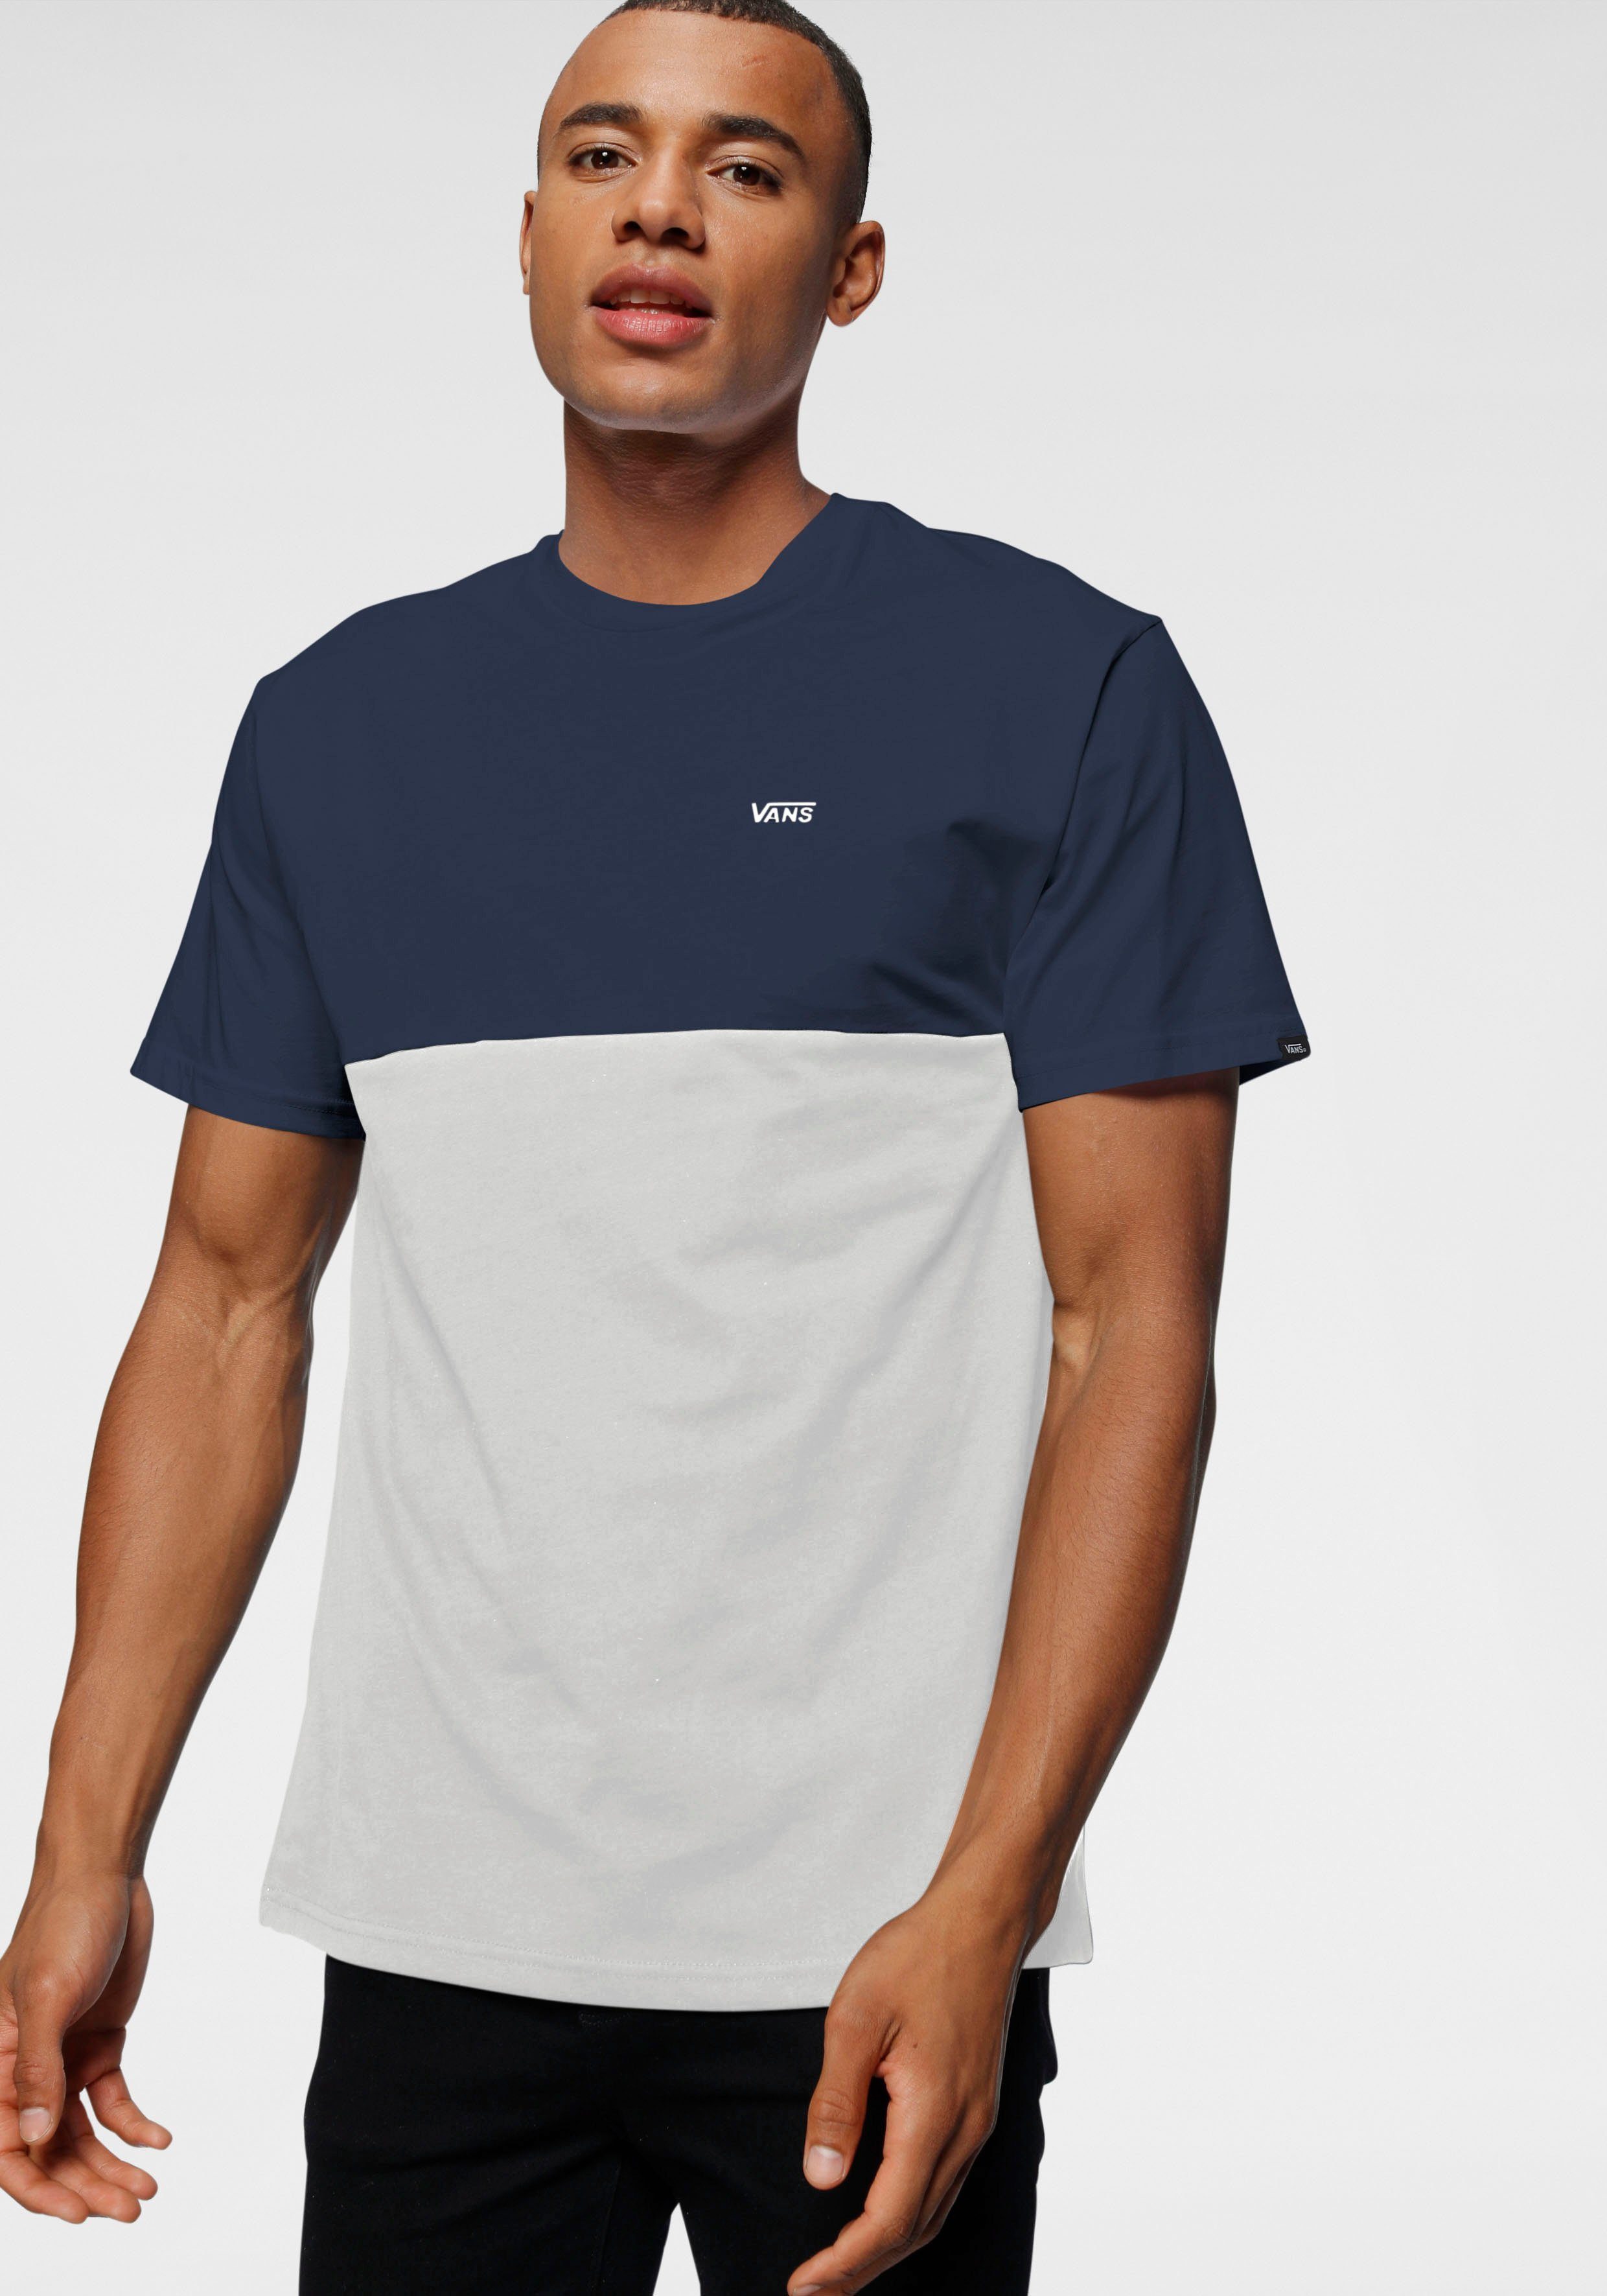 Vans T-Shirt COLOR BLOCK online kaufen | OTTO